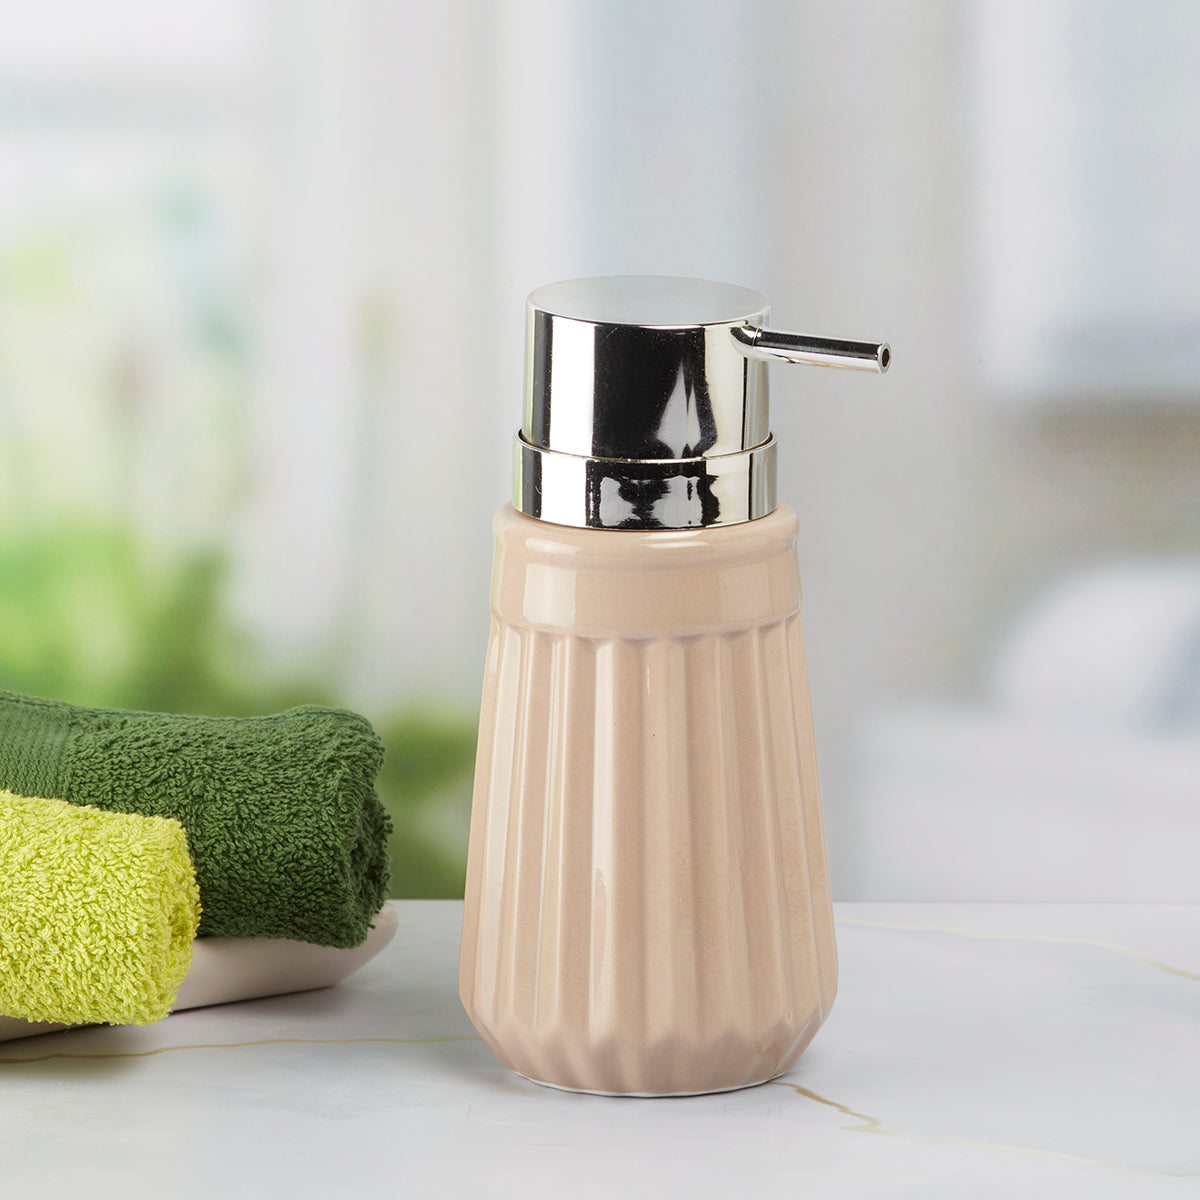 Ceramic Soap Dispenser handwash Pump for Bathroom, Set of 1, Grey (6034)